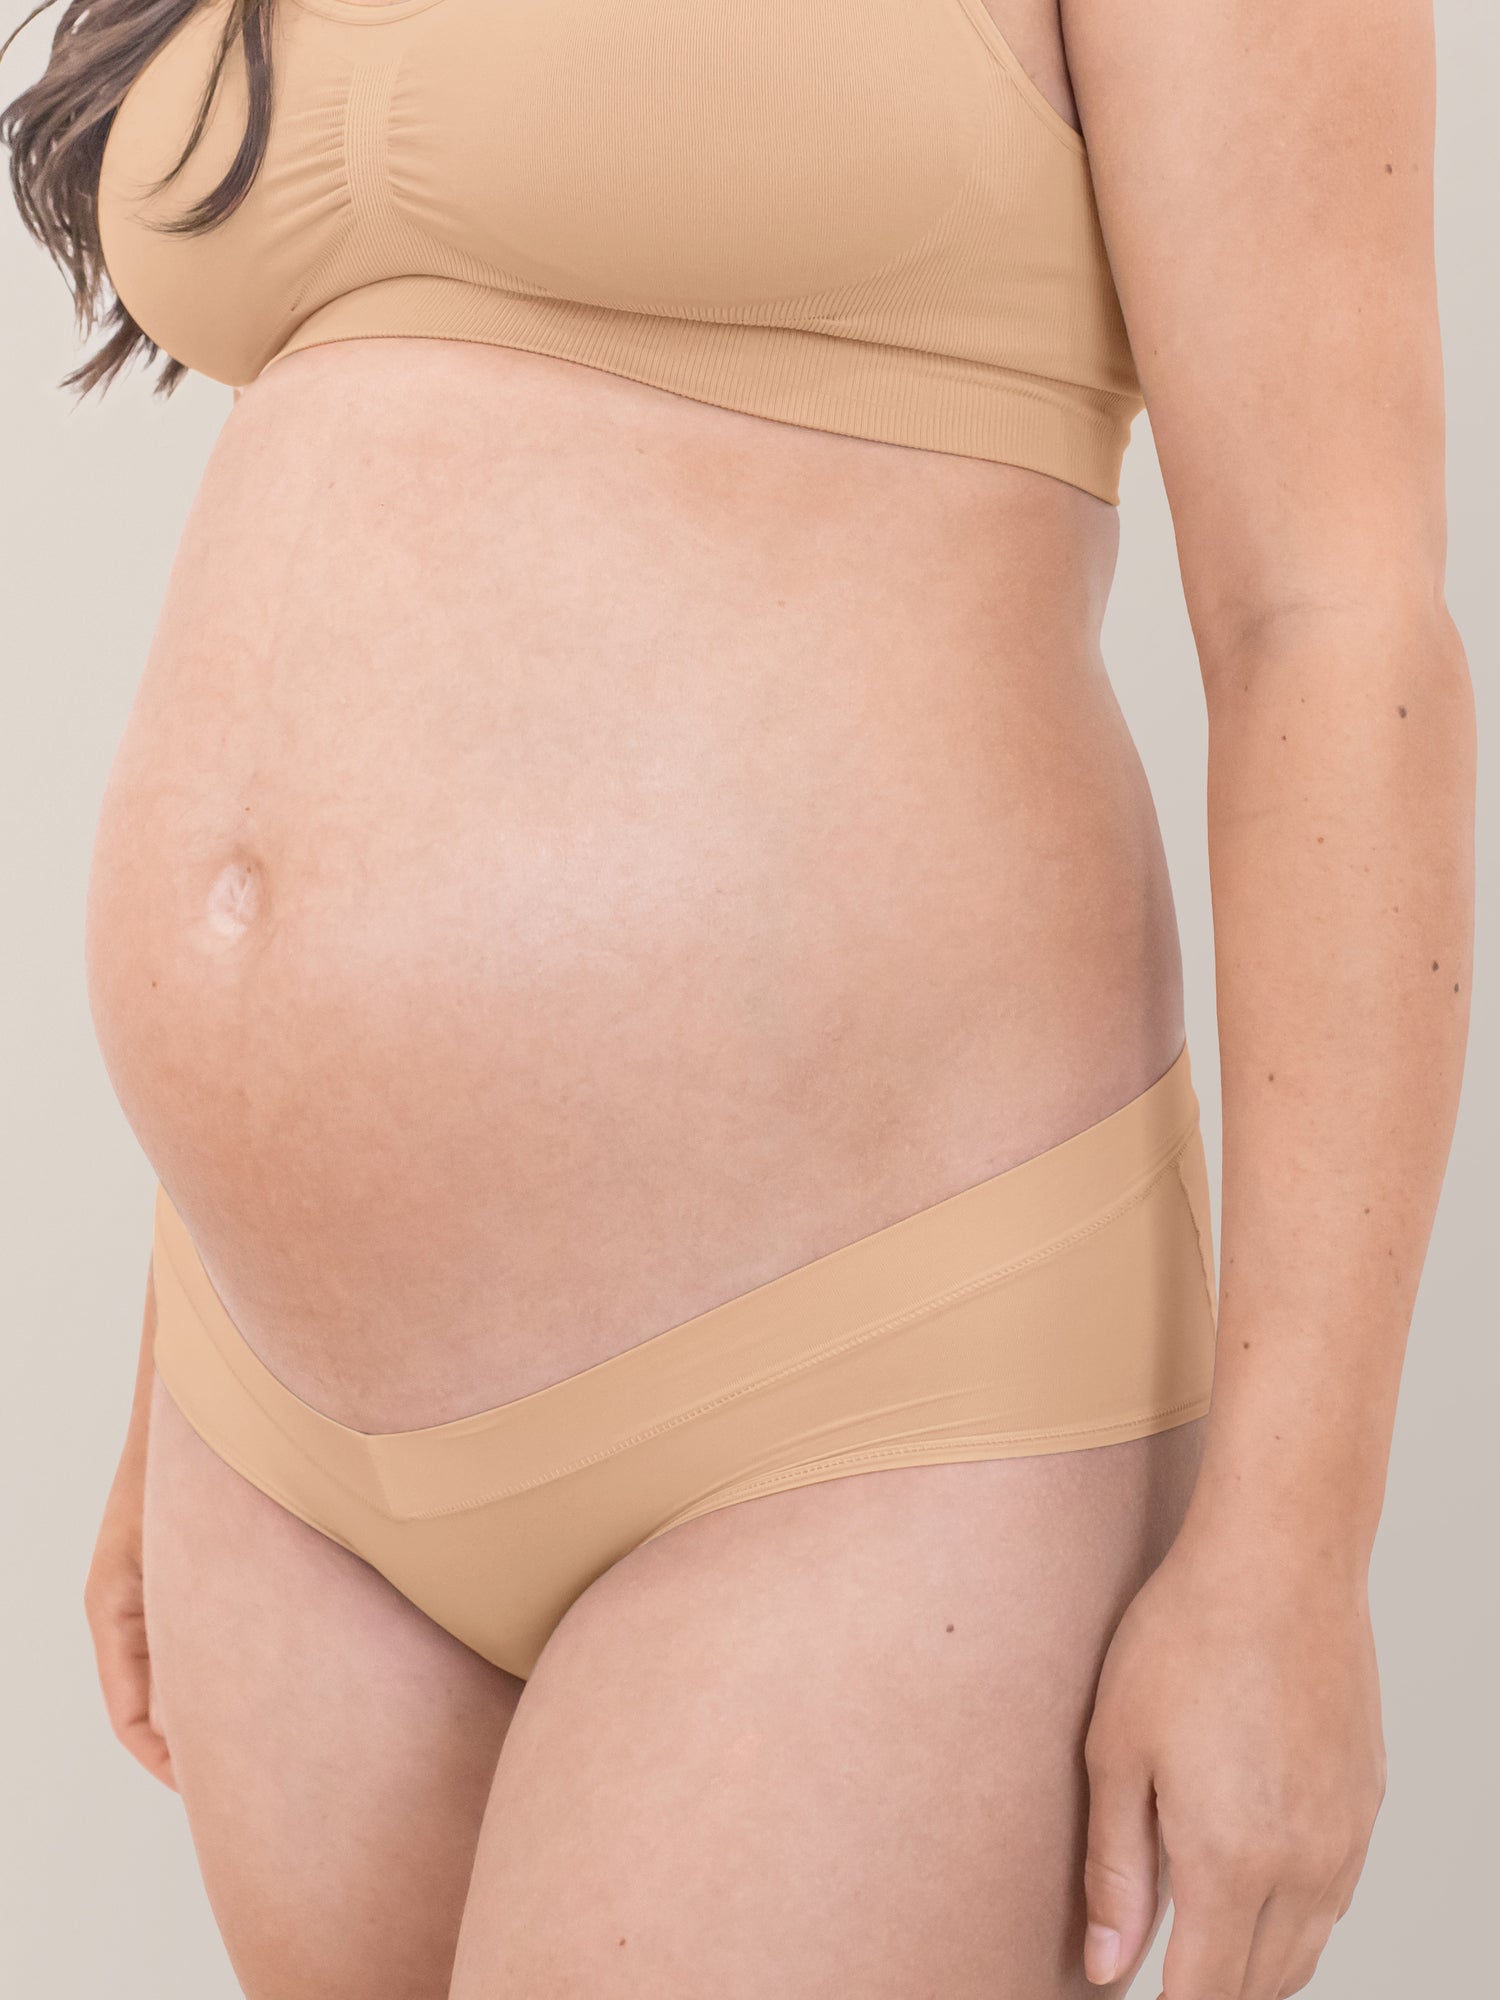 100%Cotton Maternity Pregnant Women Underwear Panties High-Waist